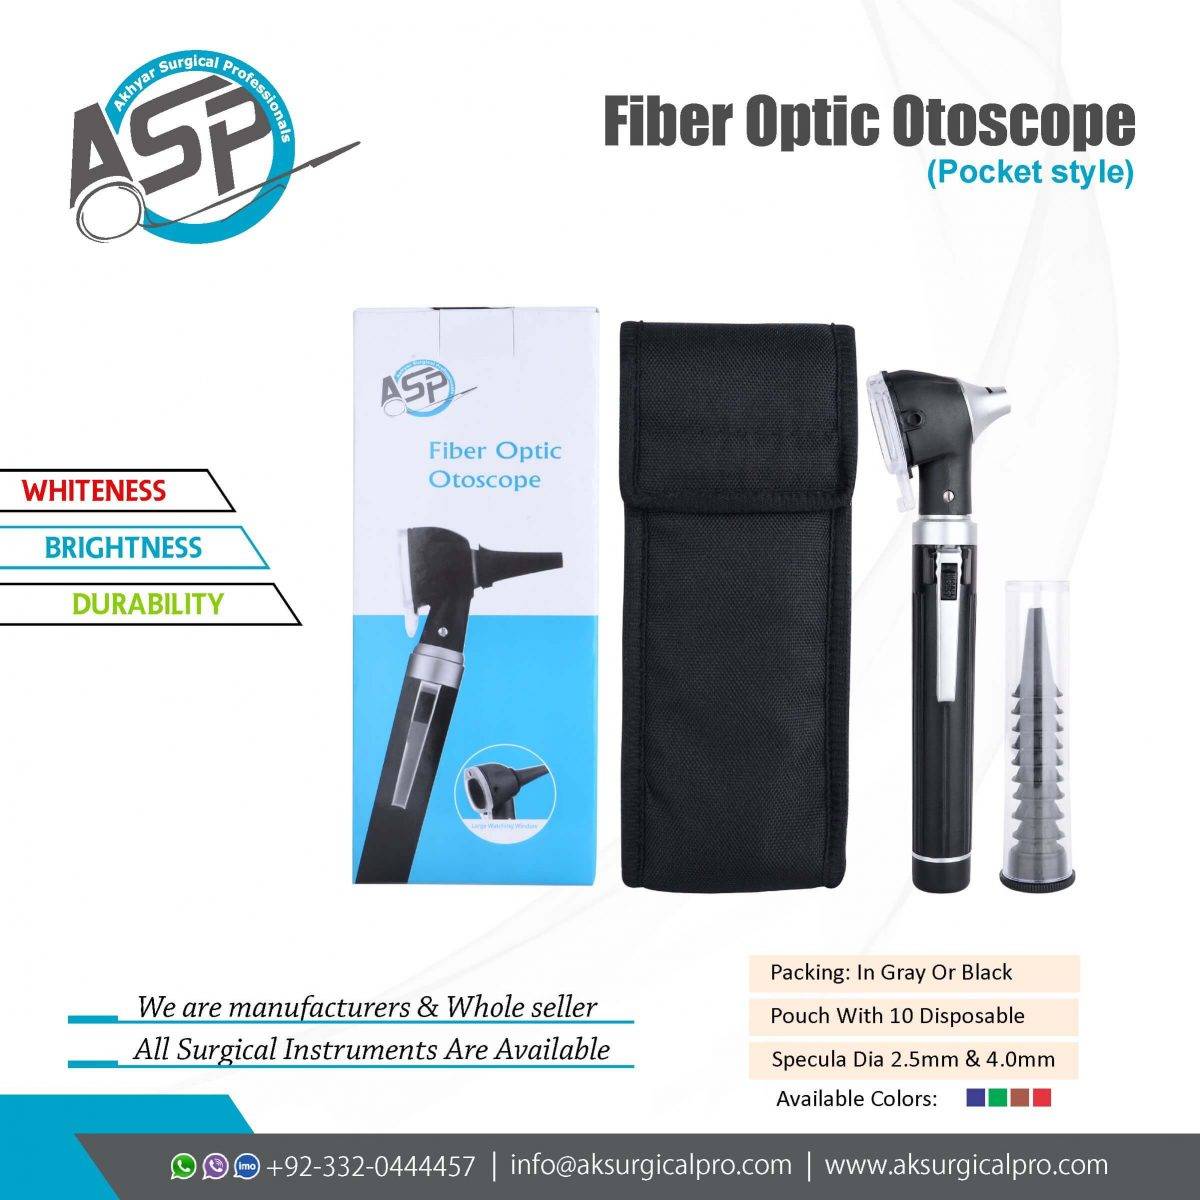 Fiber Optic Otoscope